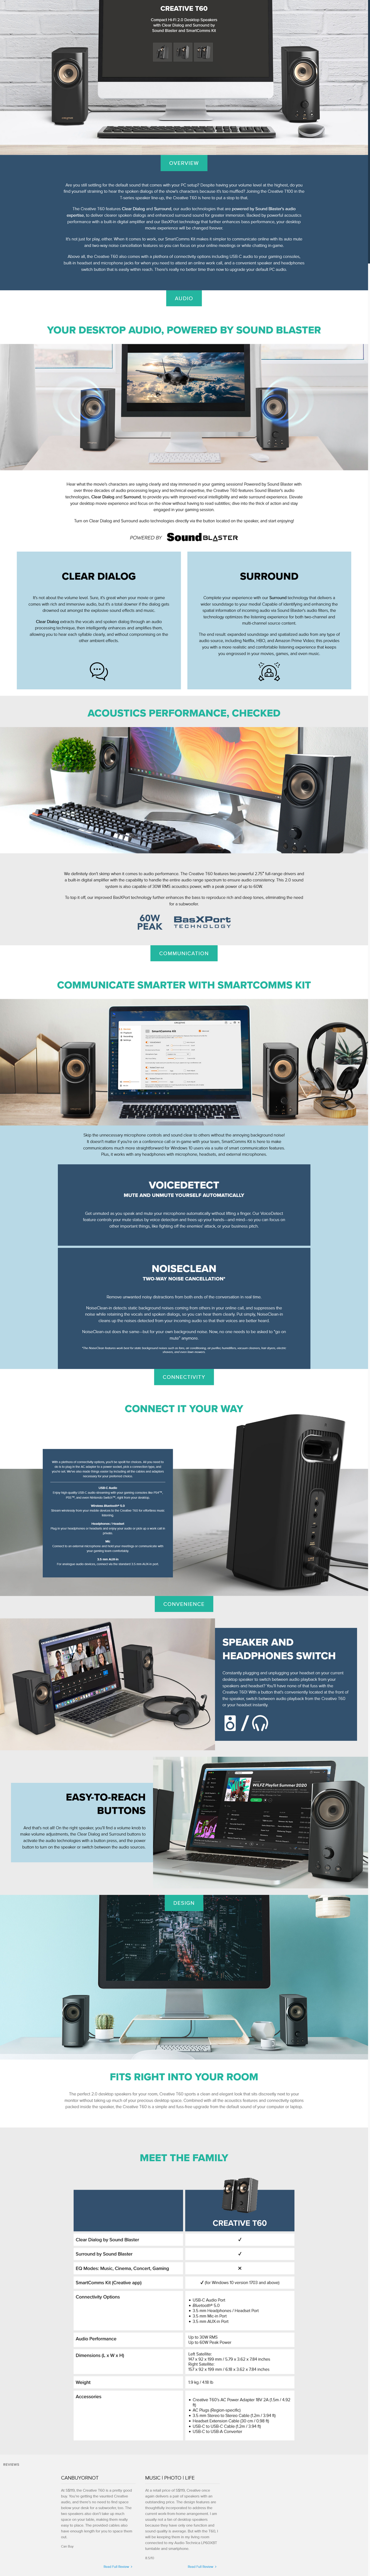 creative t60 premium 20 speakers with bluetooth 51mf1705aa002